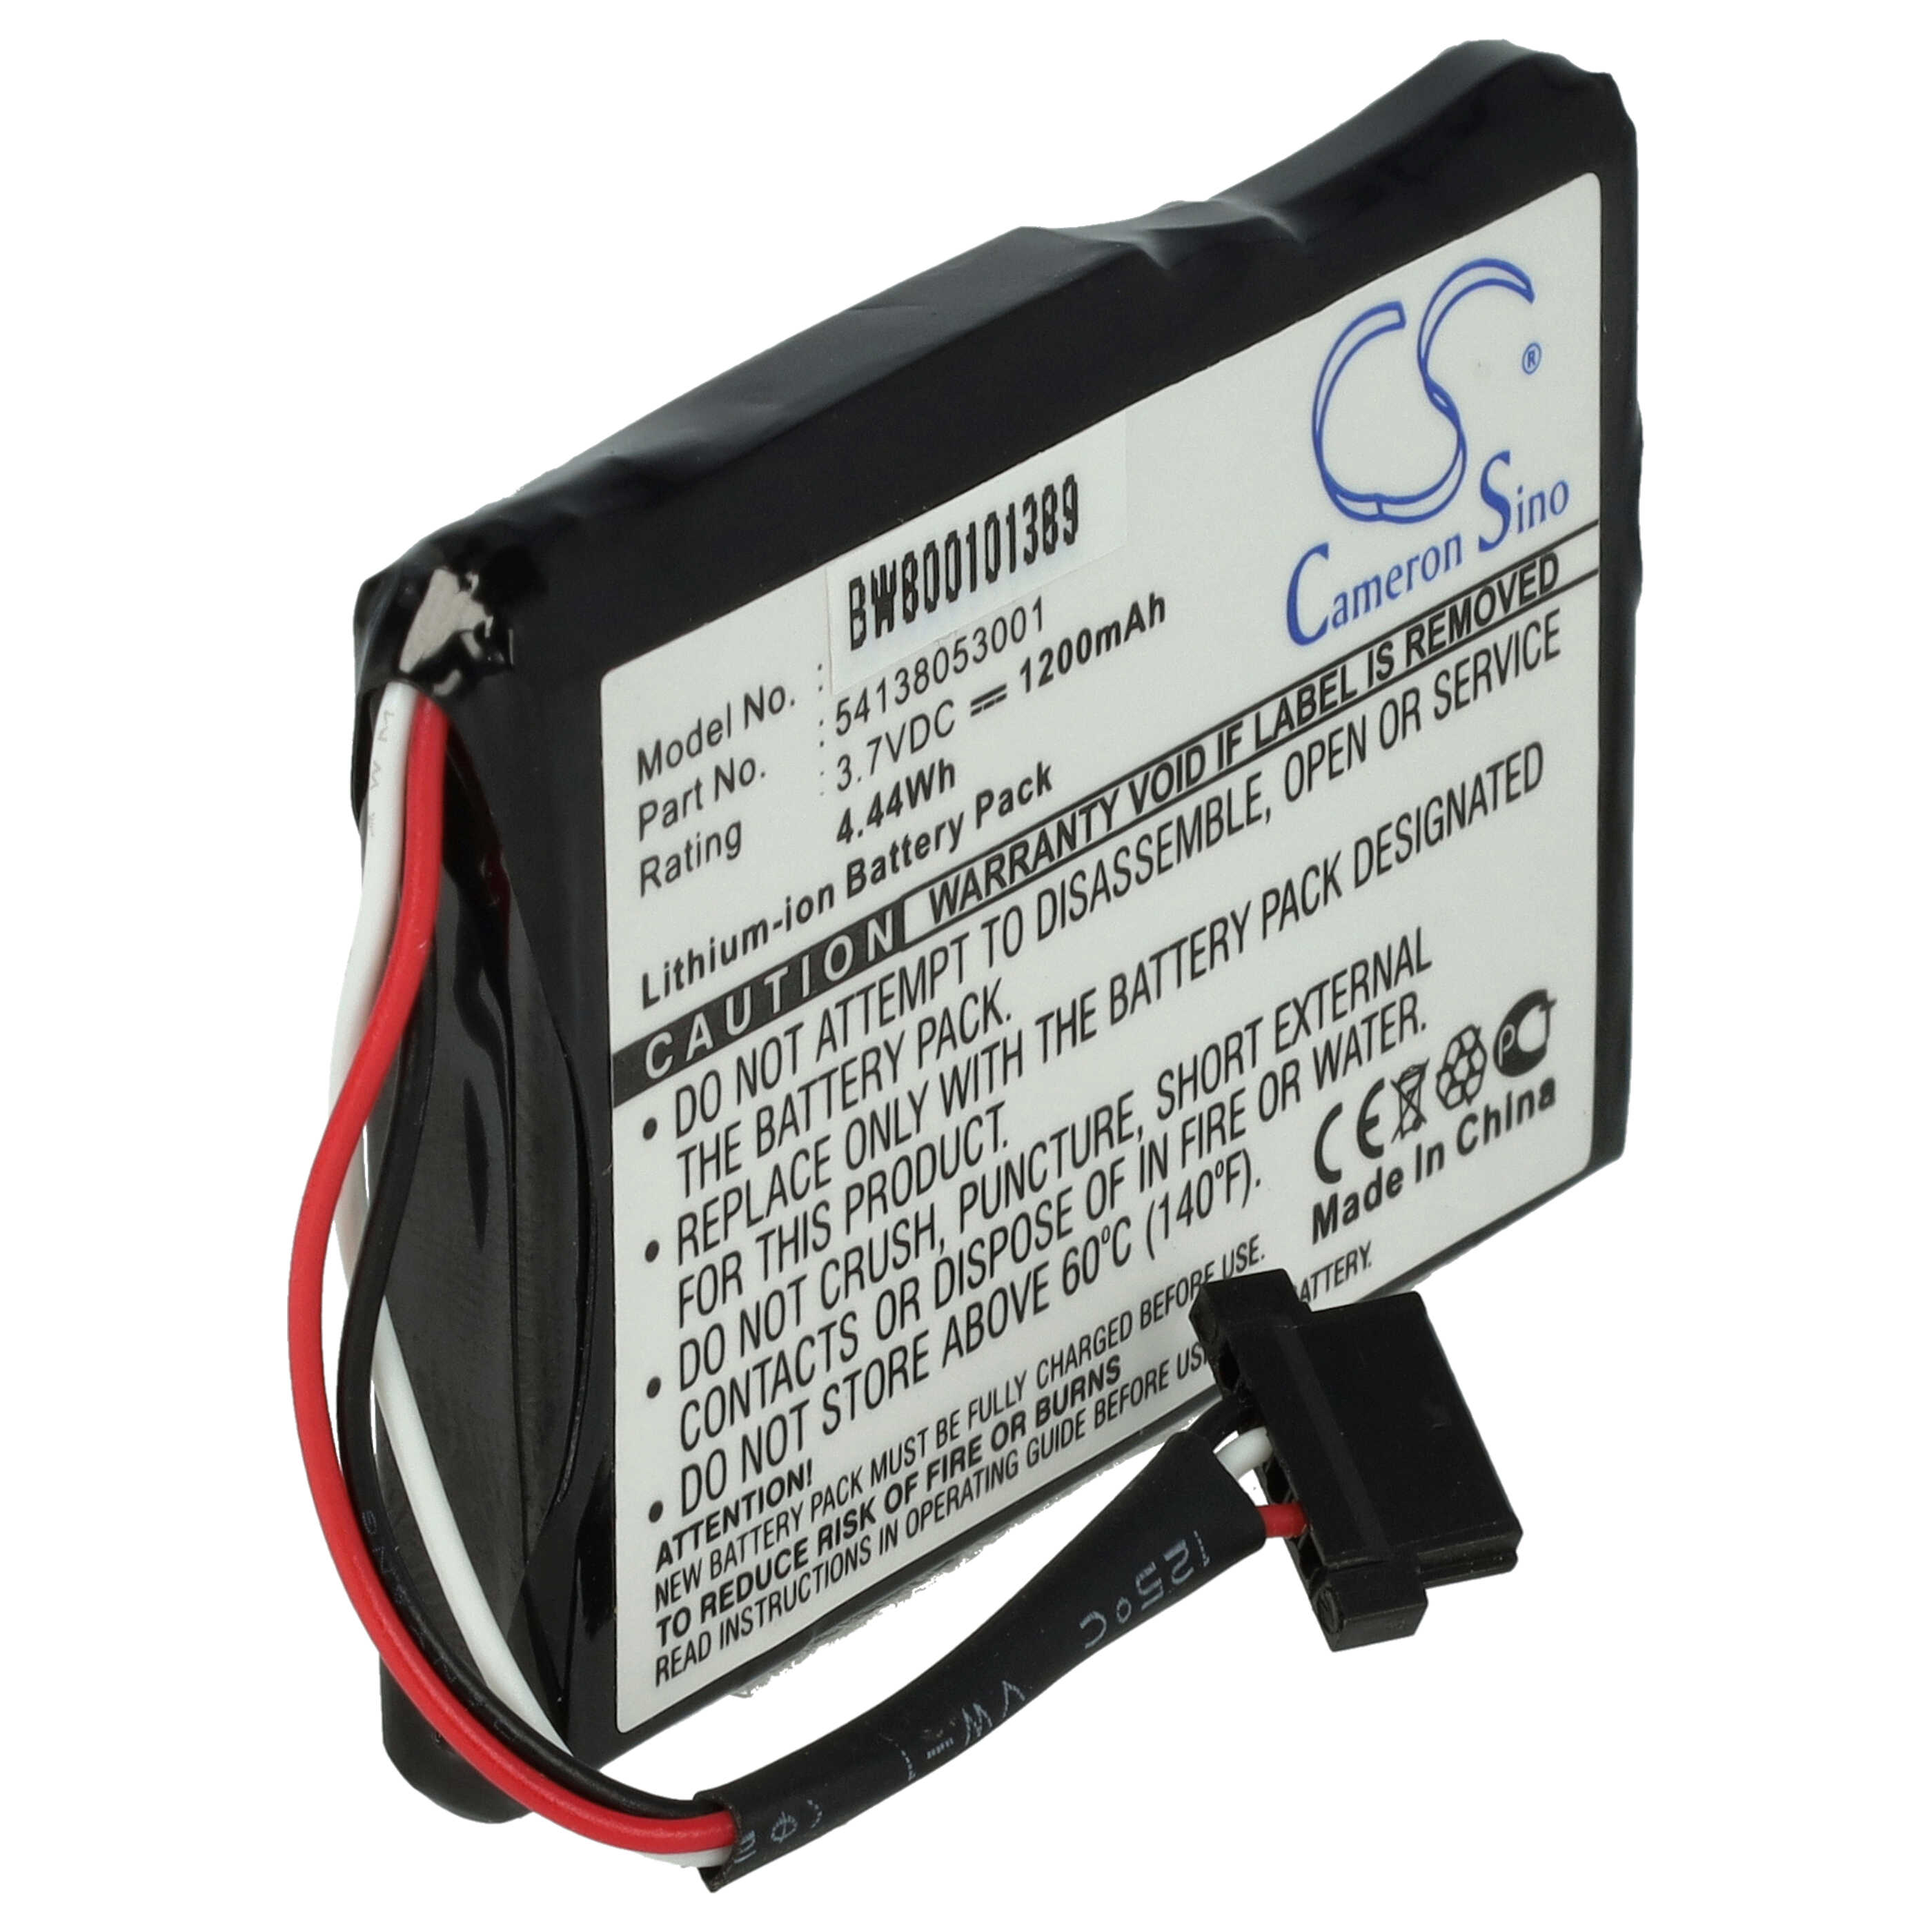 GPS Battery Replacement for Navigon 541380530001 - 1200mAh, 3.7V